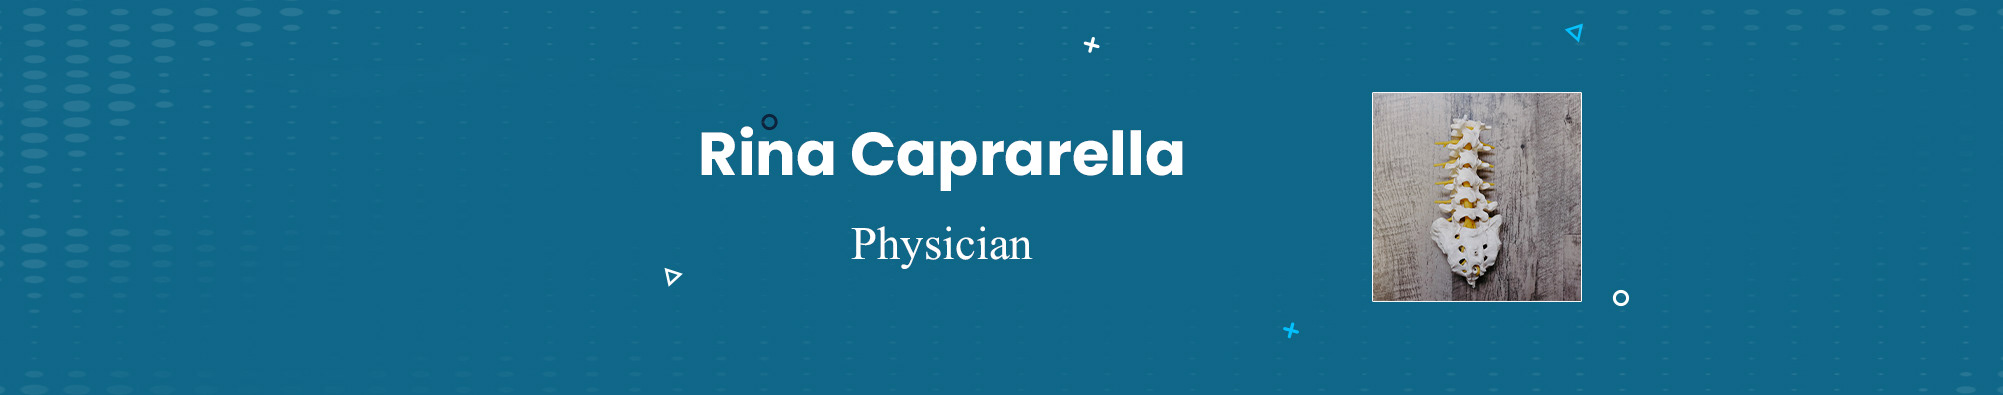 Rina Caprarella のプロファイルバナー